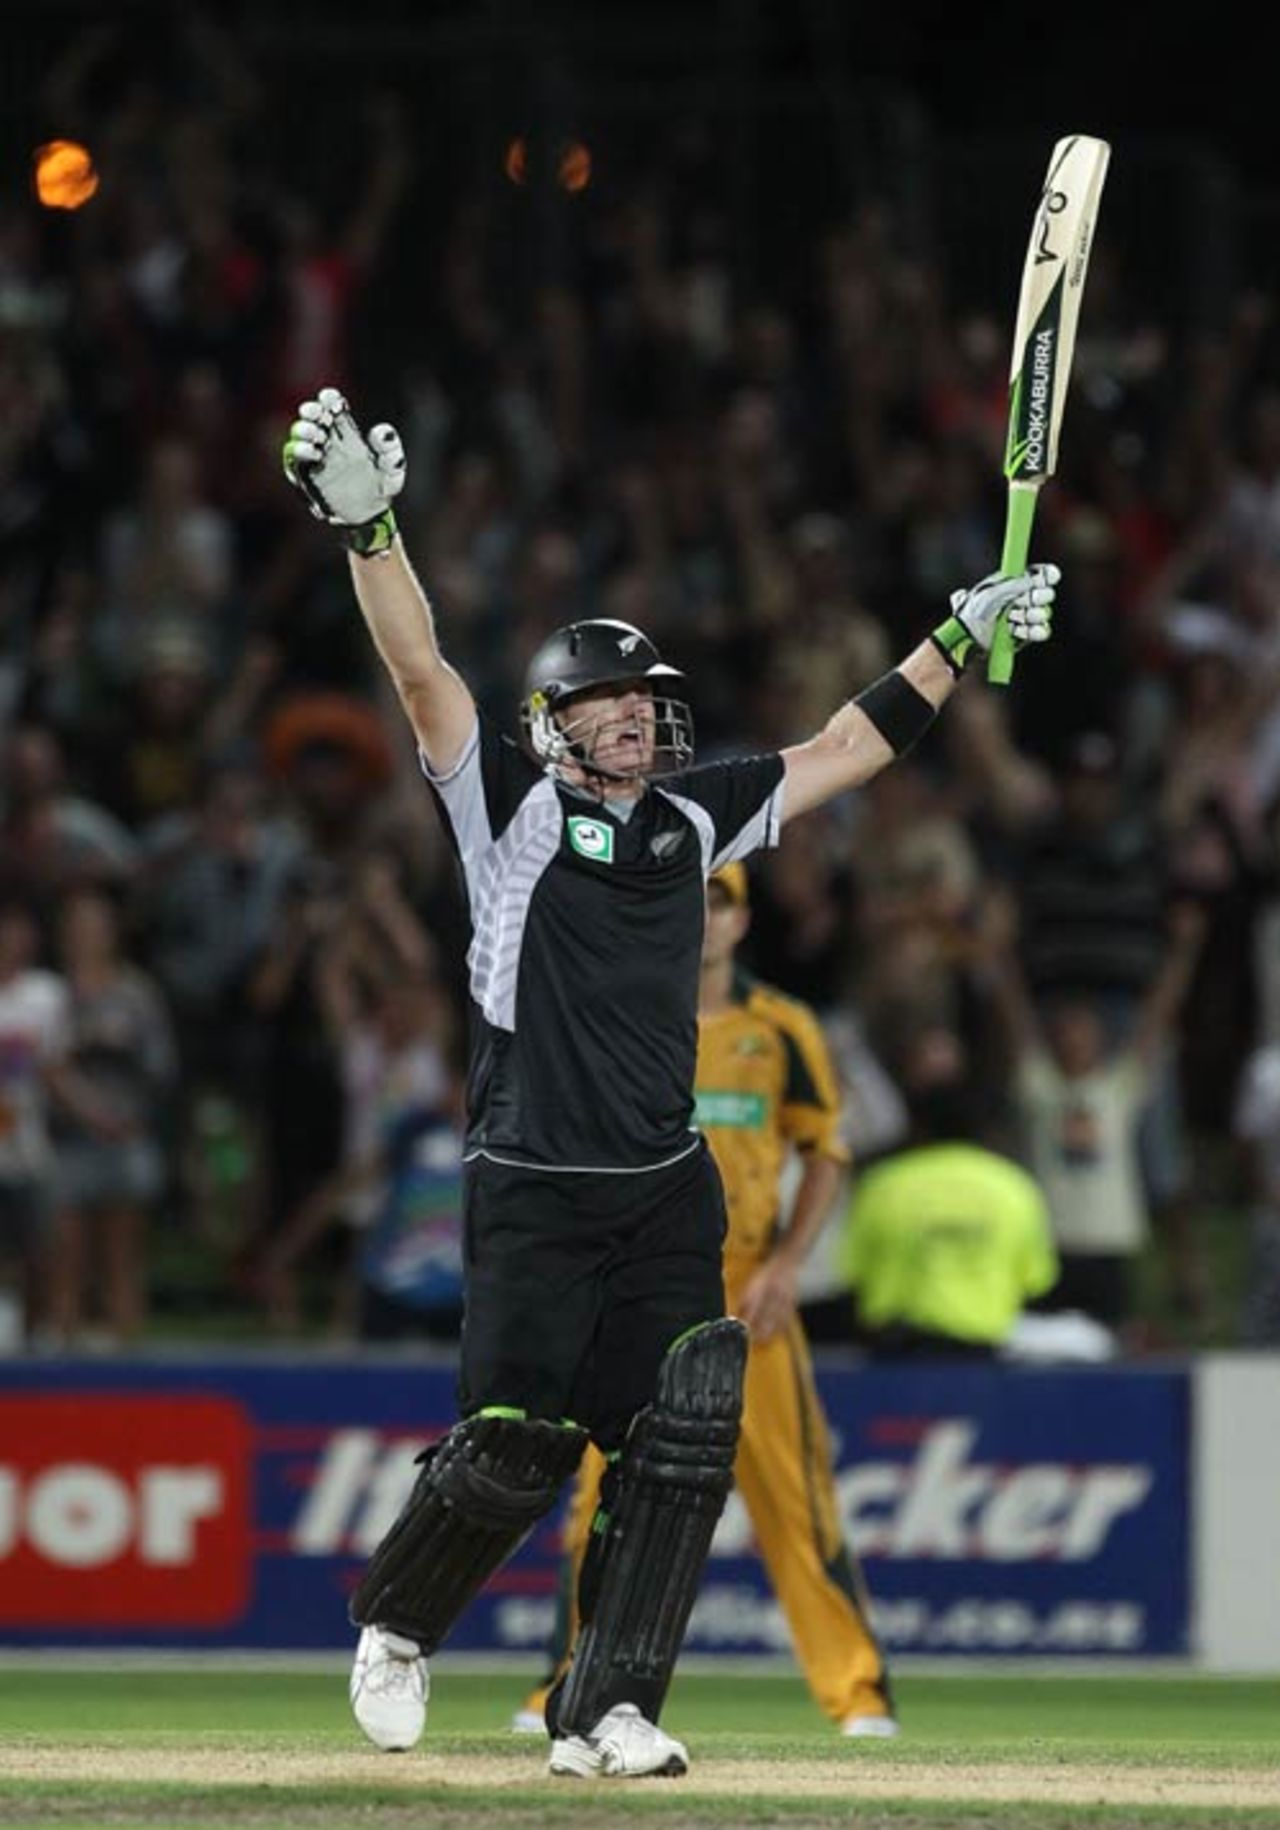 Scott Styris is thrilled after hitting the winning runs, New Zealand v Australia, 1st ODI, Napier, March 3, 2010